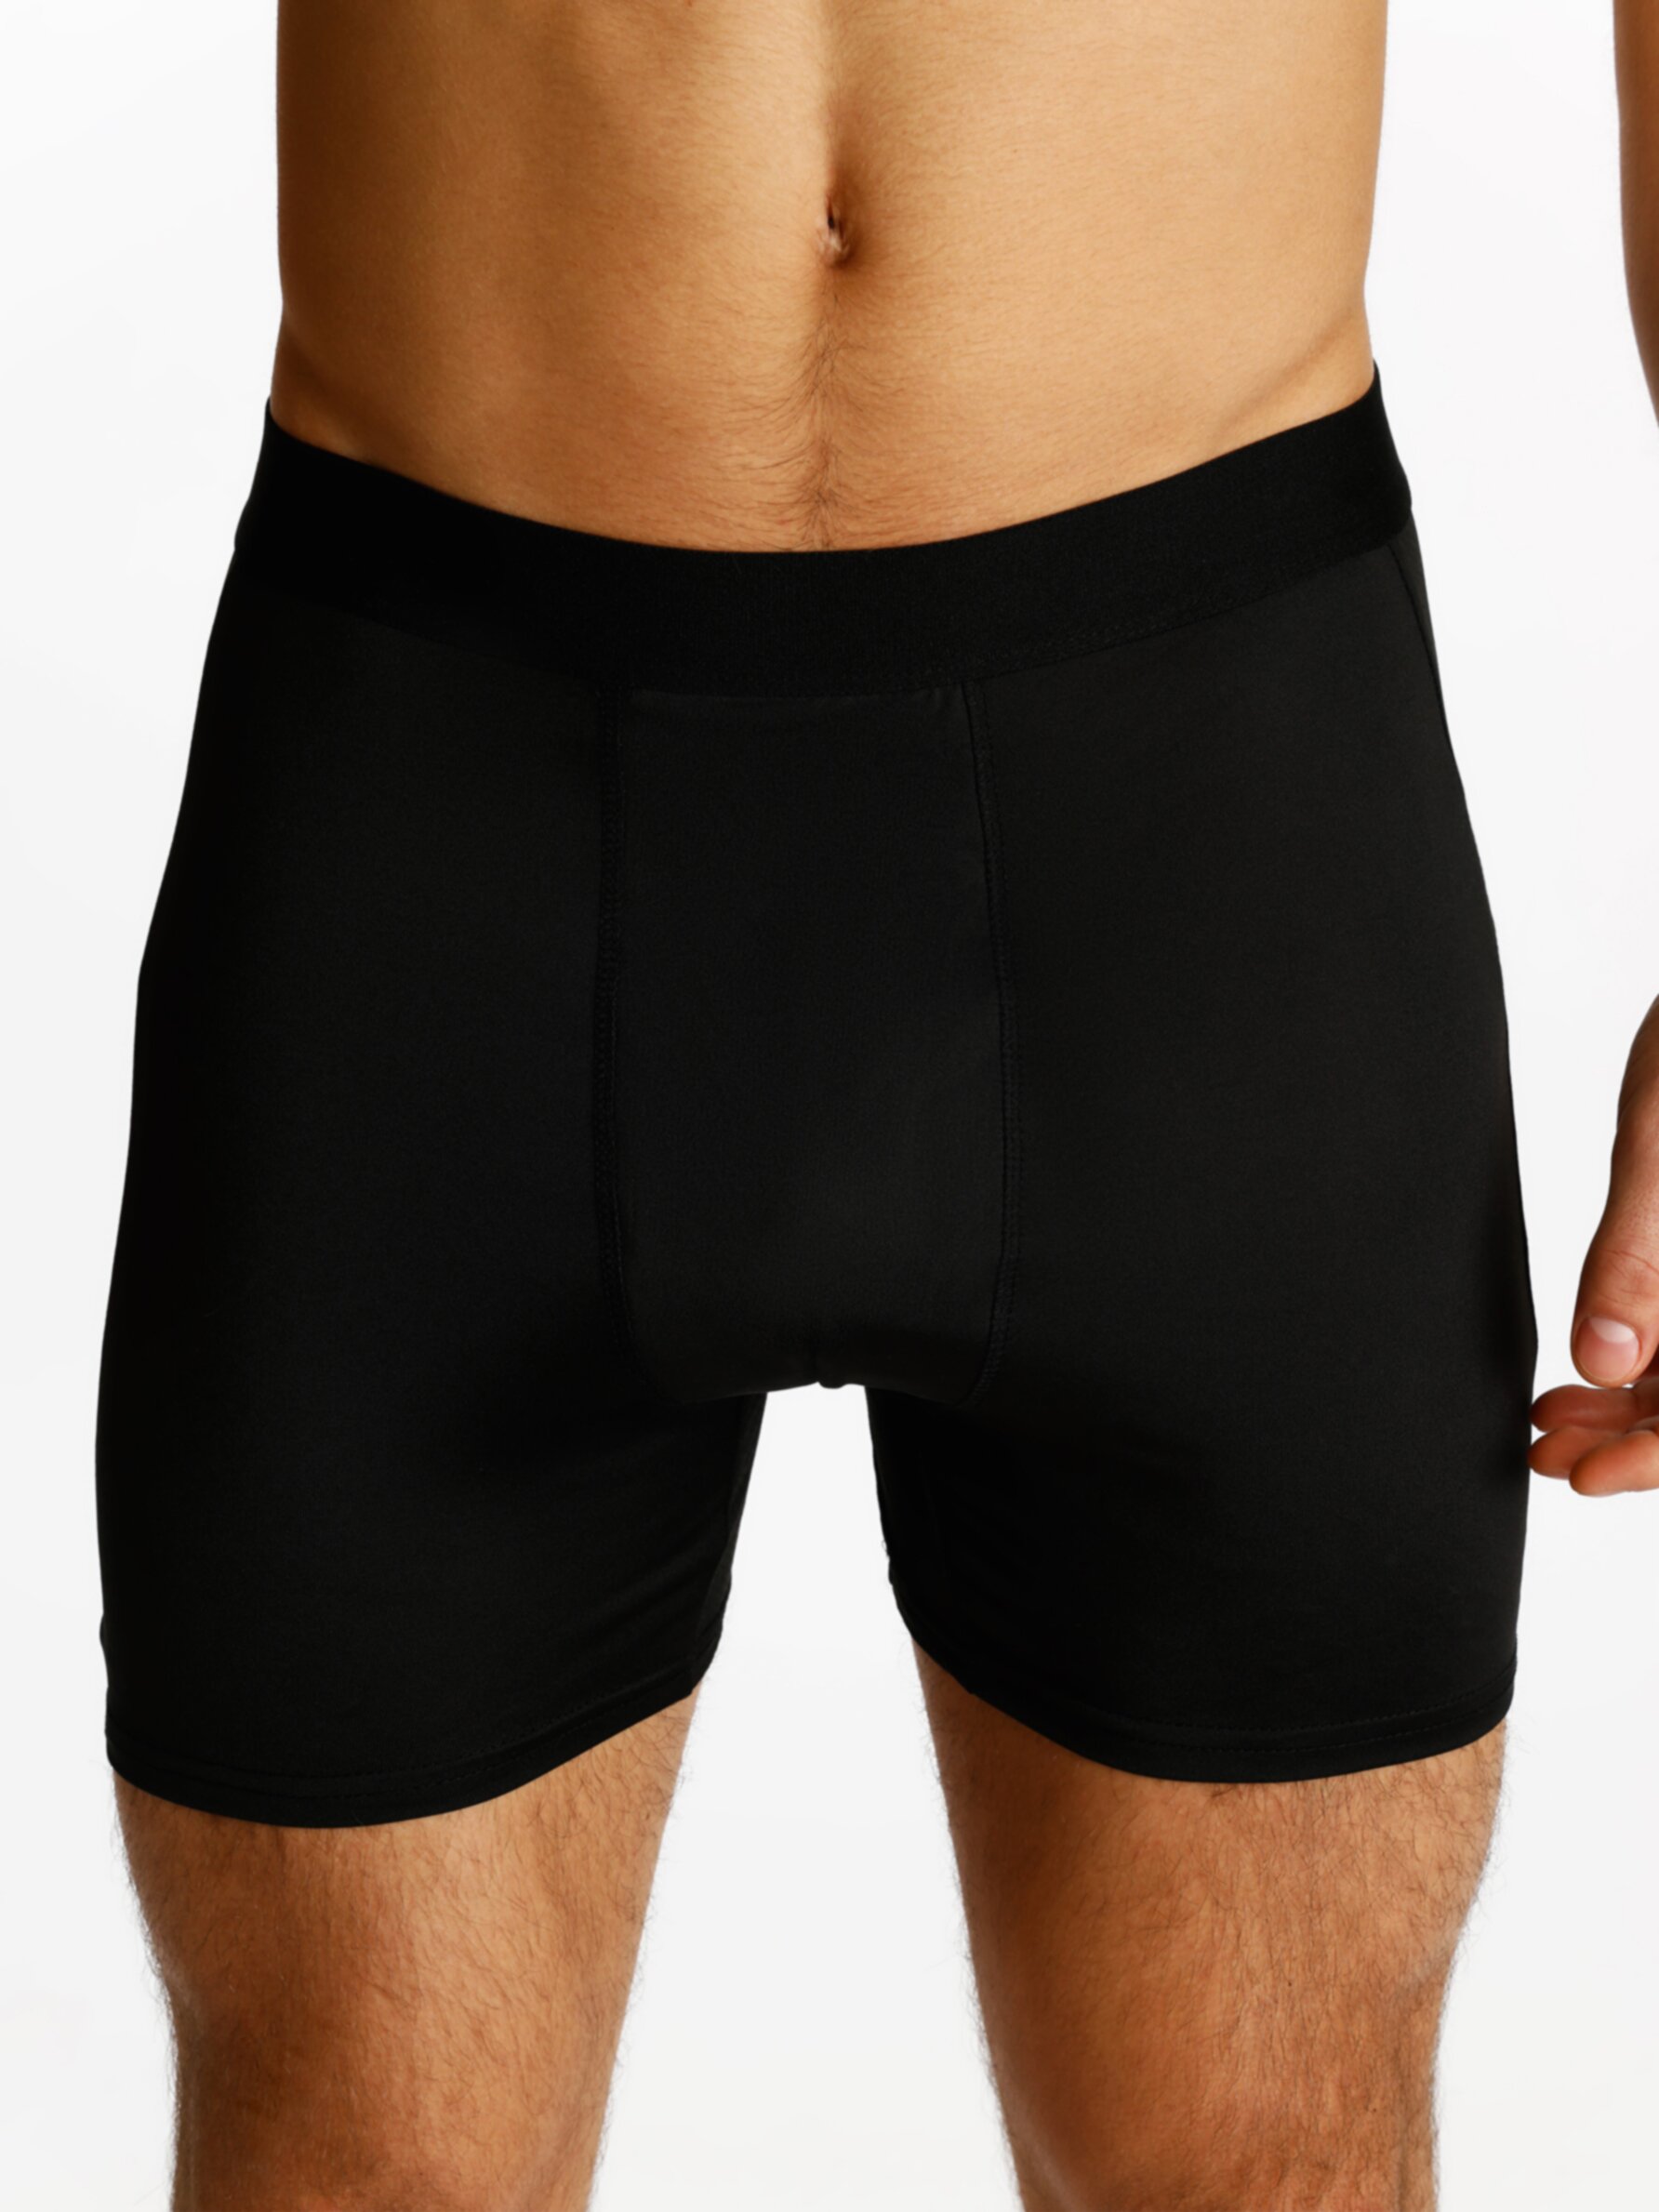 Men's Long Leg Boxer Shorts No Ride Up Cotton Trunks Sports Underpants  Underwear (L) price in UAE,  UAE